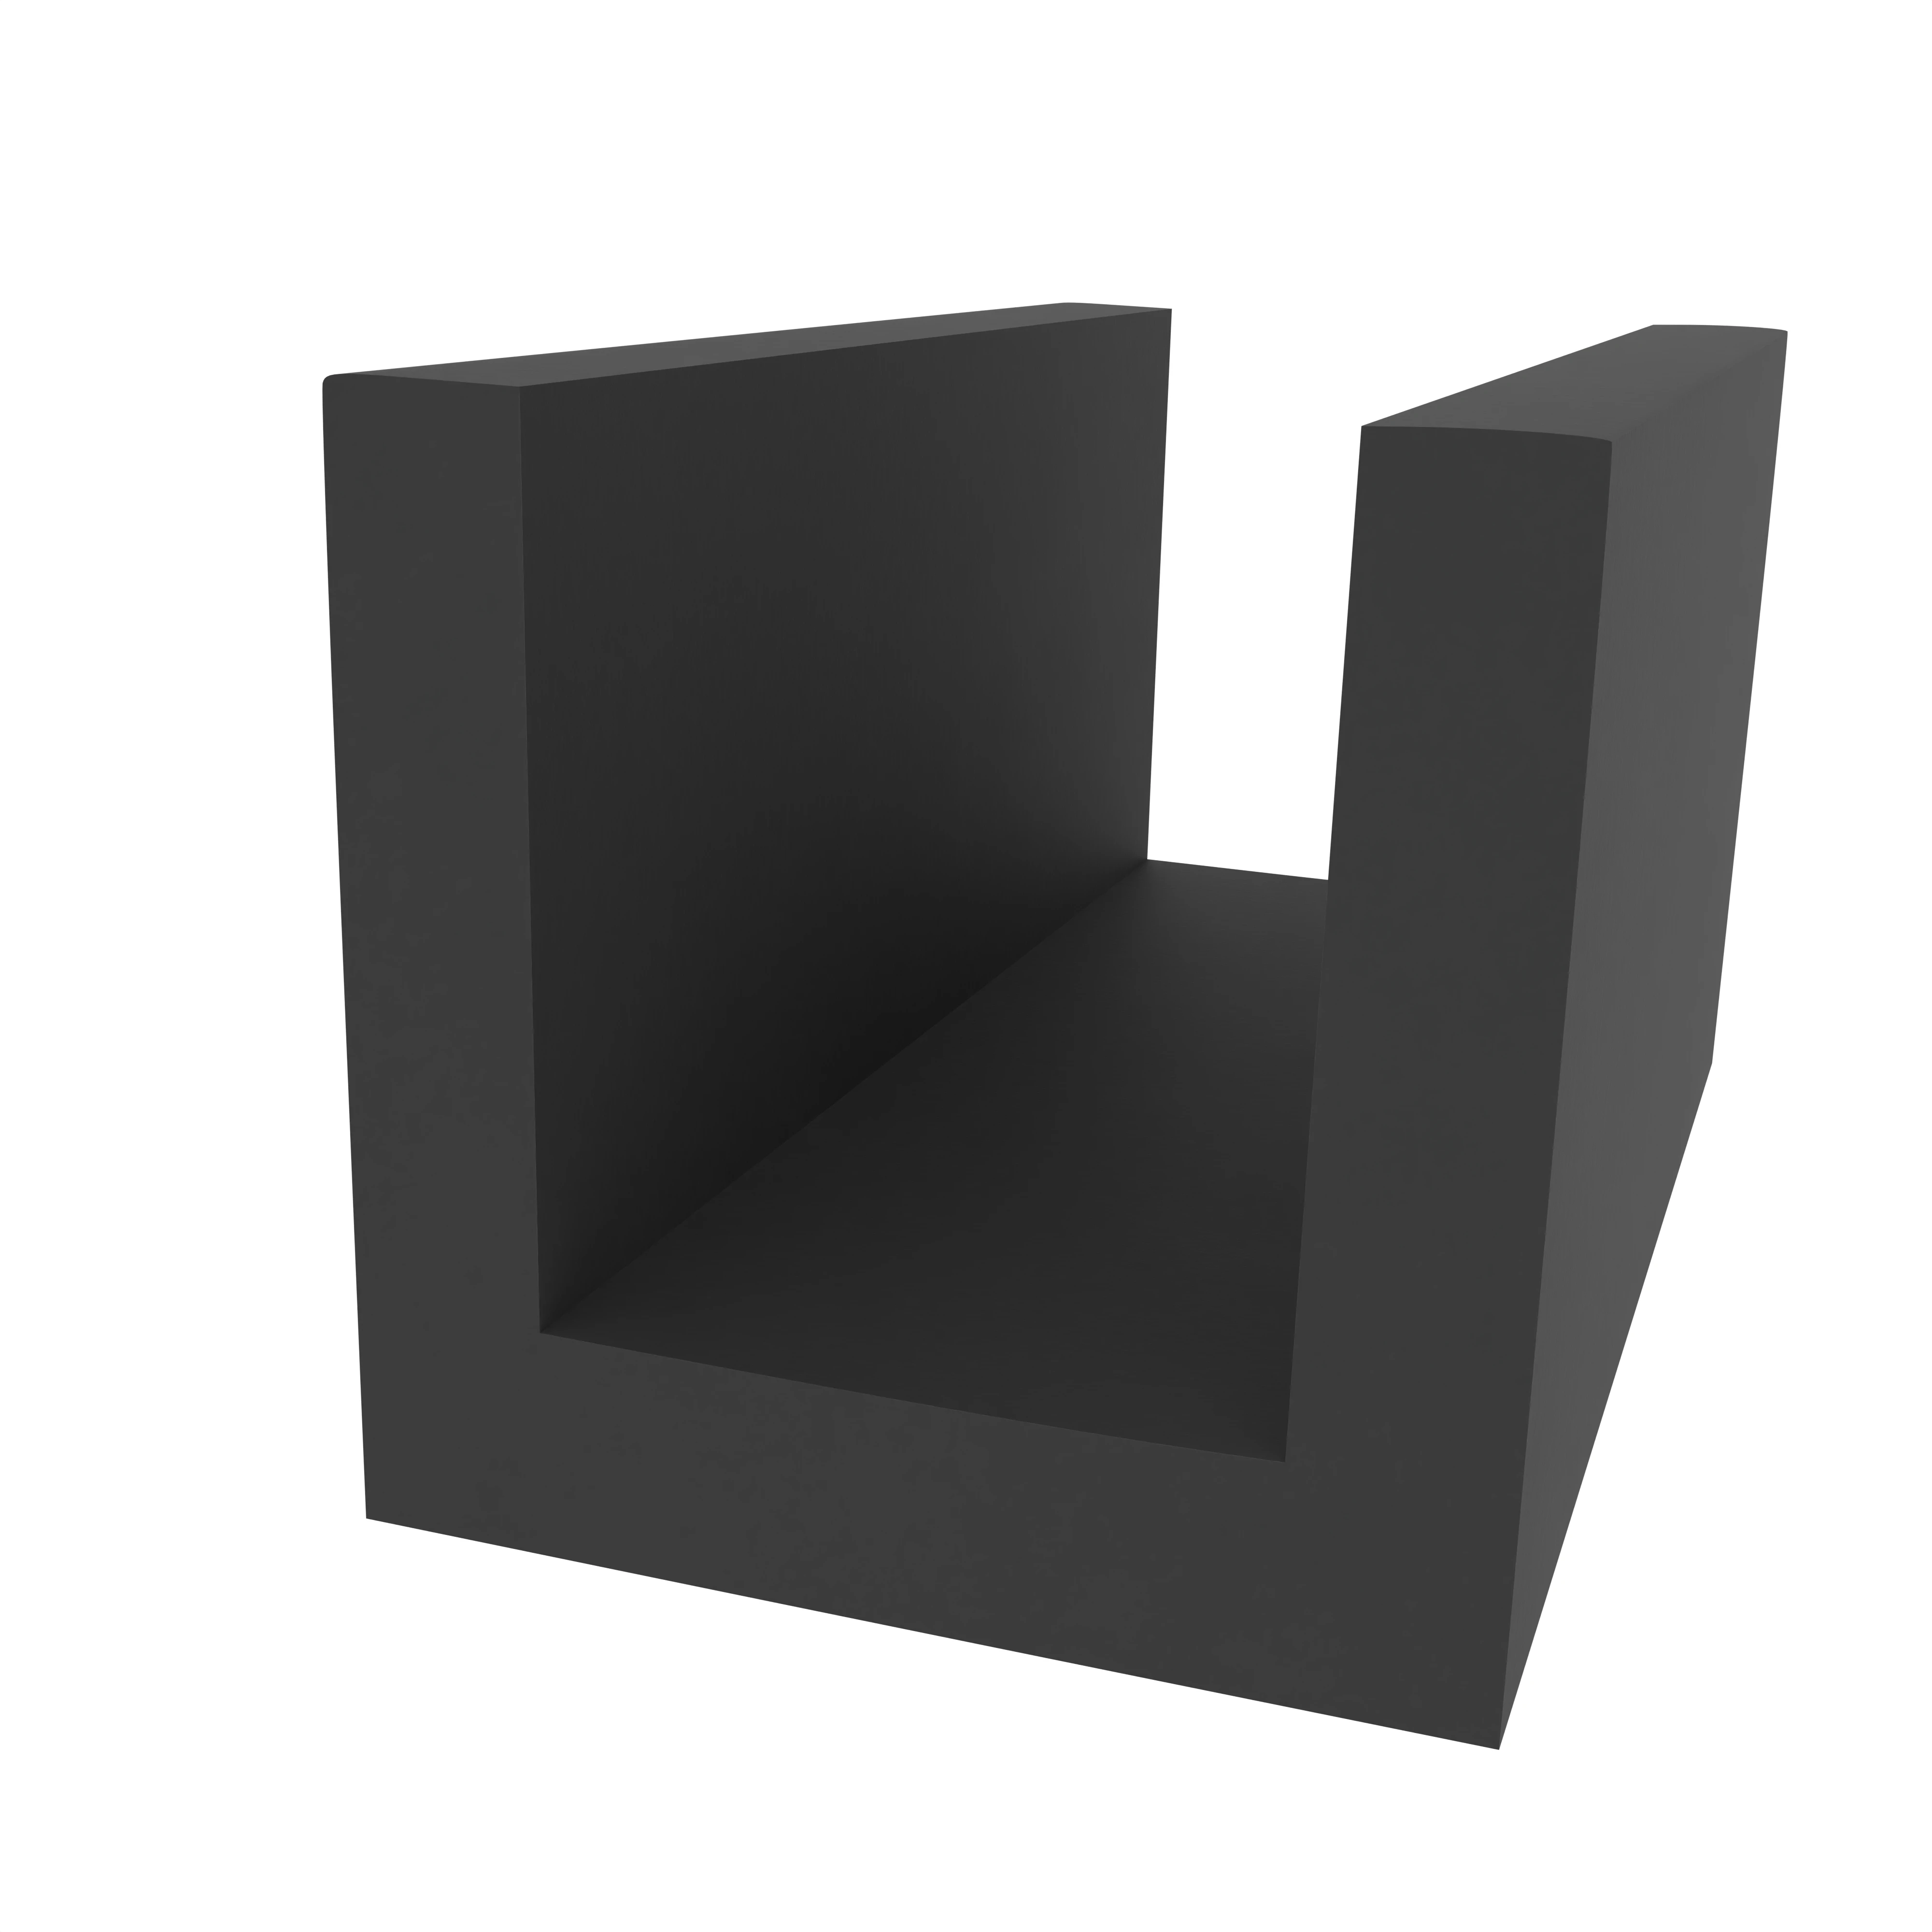 Kantenschutzprofil | Höhe: 15 mm | Farbe: schwarz